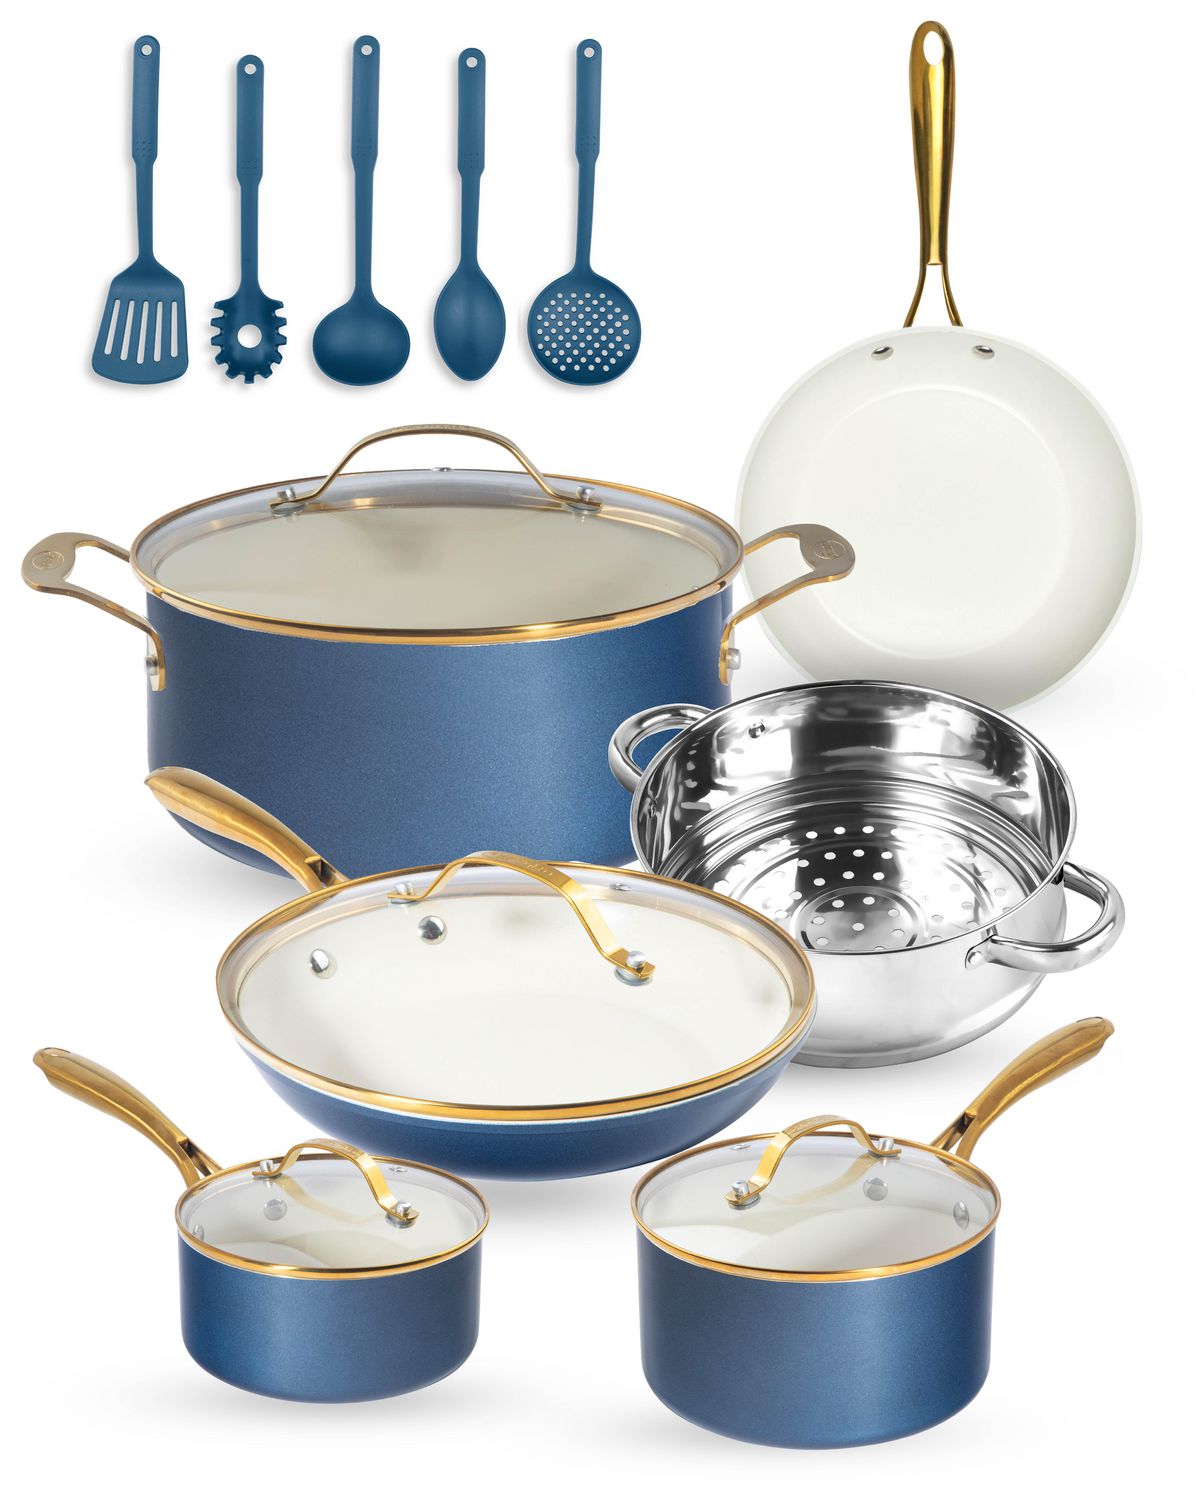 Gotham Steel Nonstick Cookware Set Pots and Pans Set with Utensils